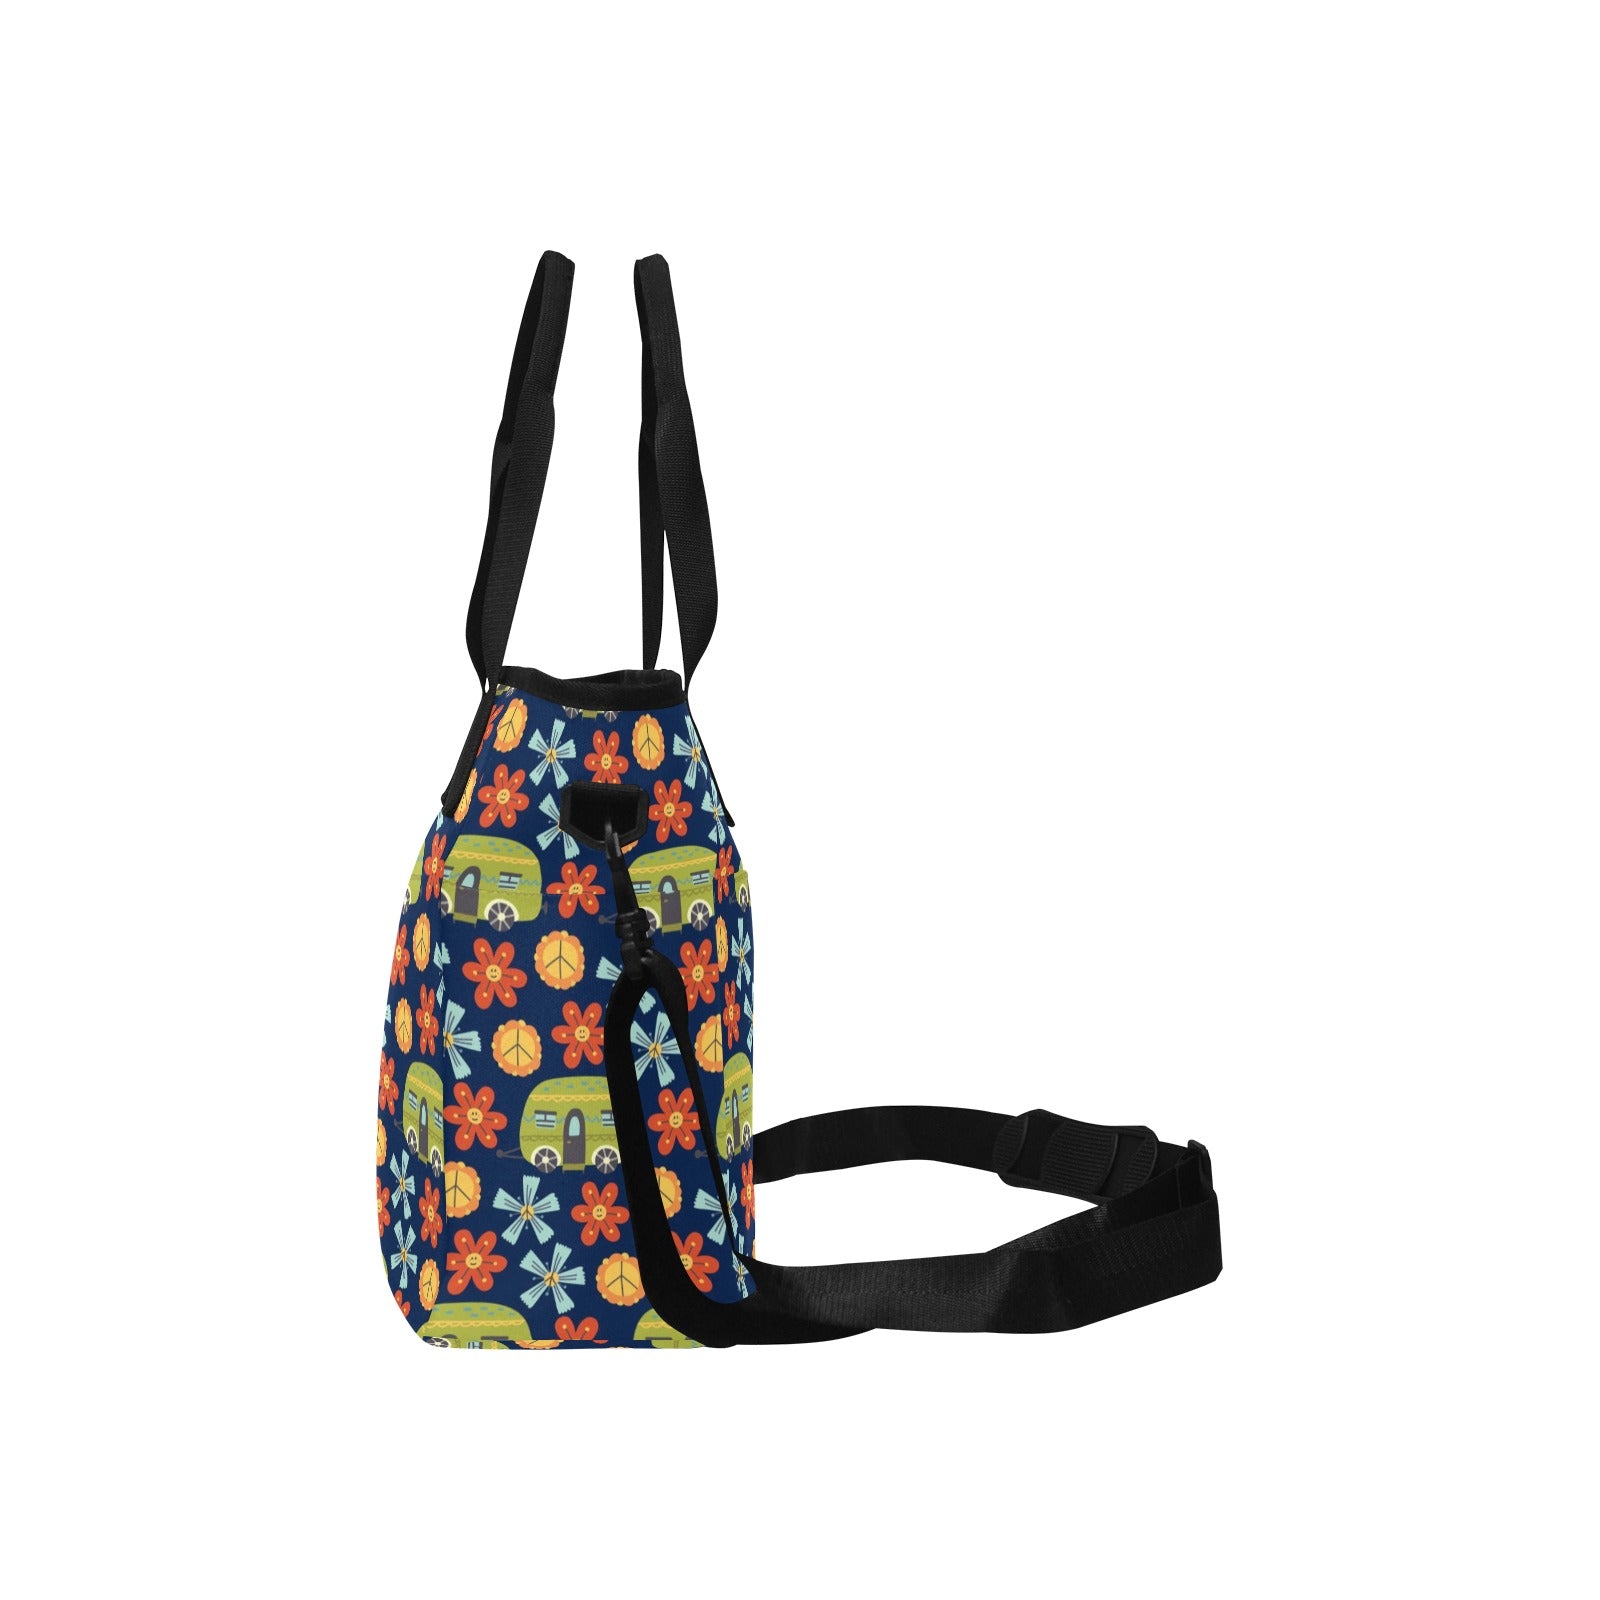 Hippy Caravan - Tote Bag with Shoulder Strap Nylon Tote Bag